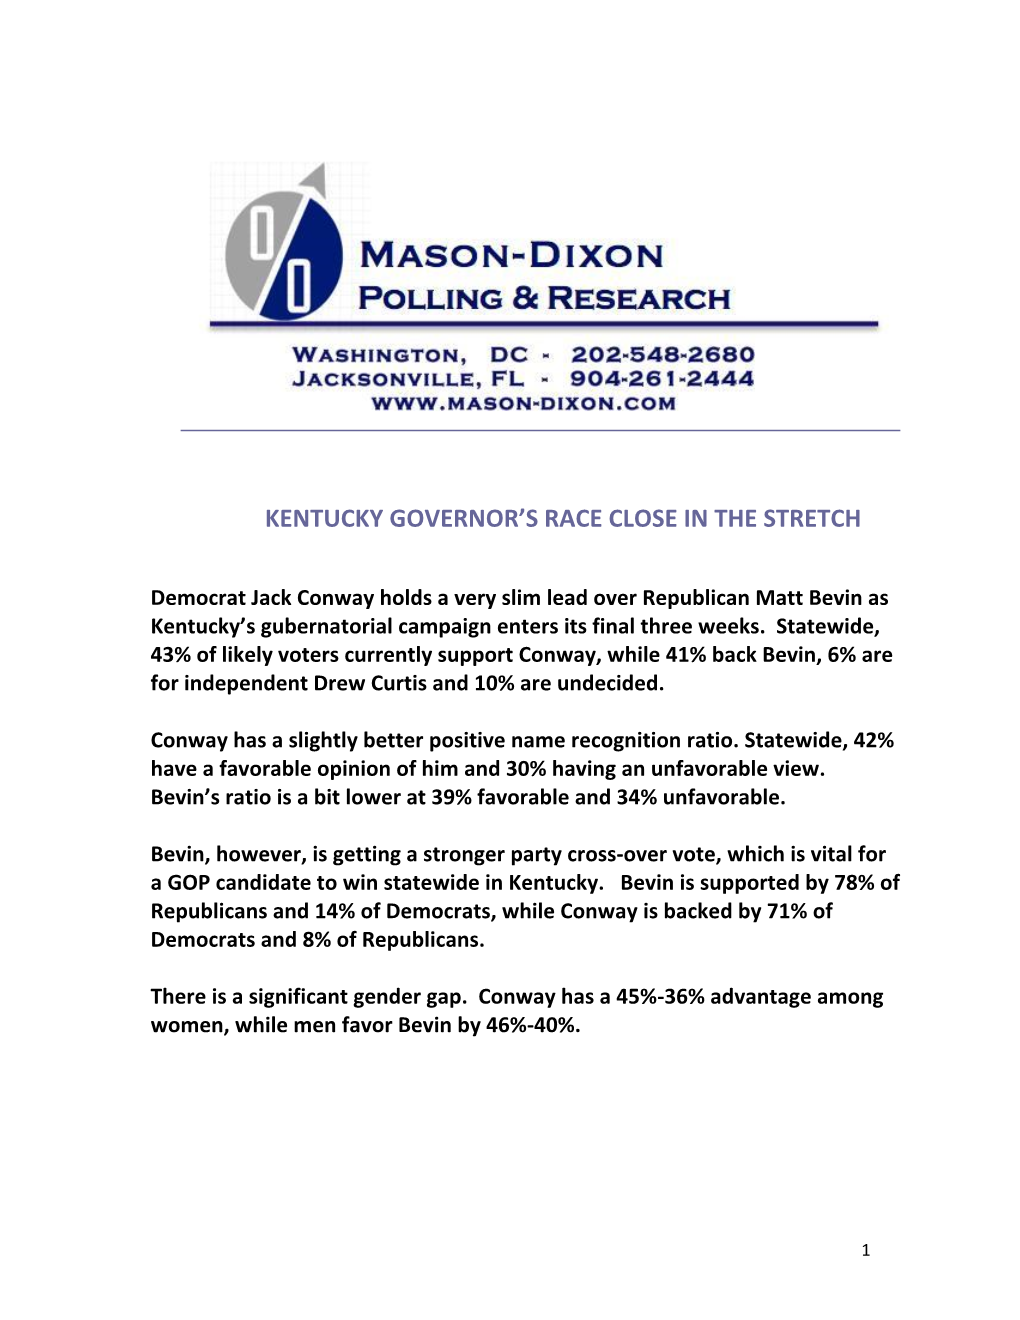 Mason-Dixon Polling & Research, Inc